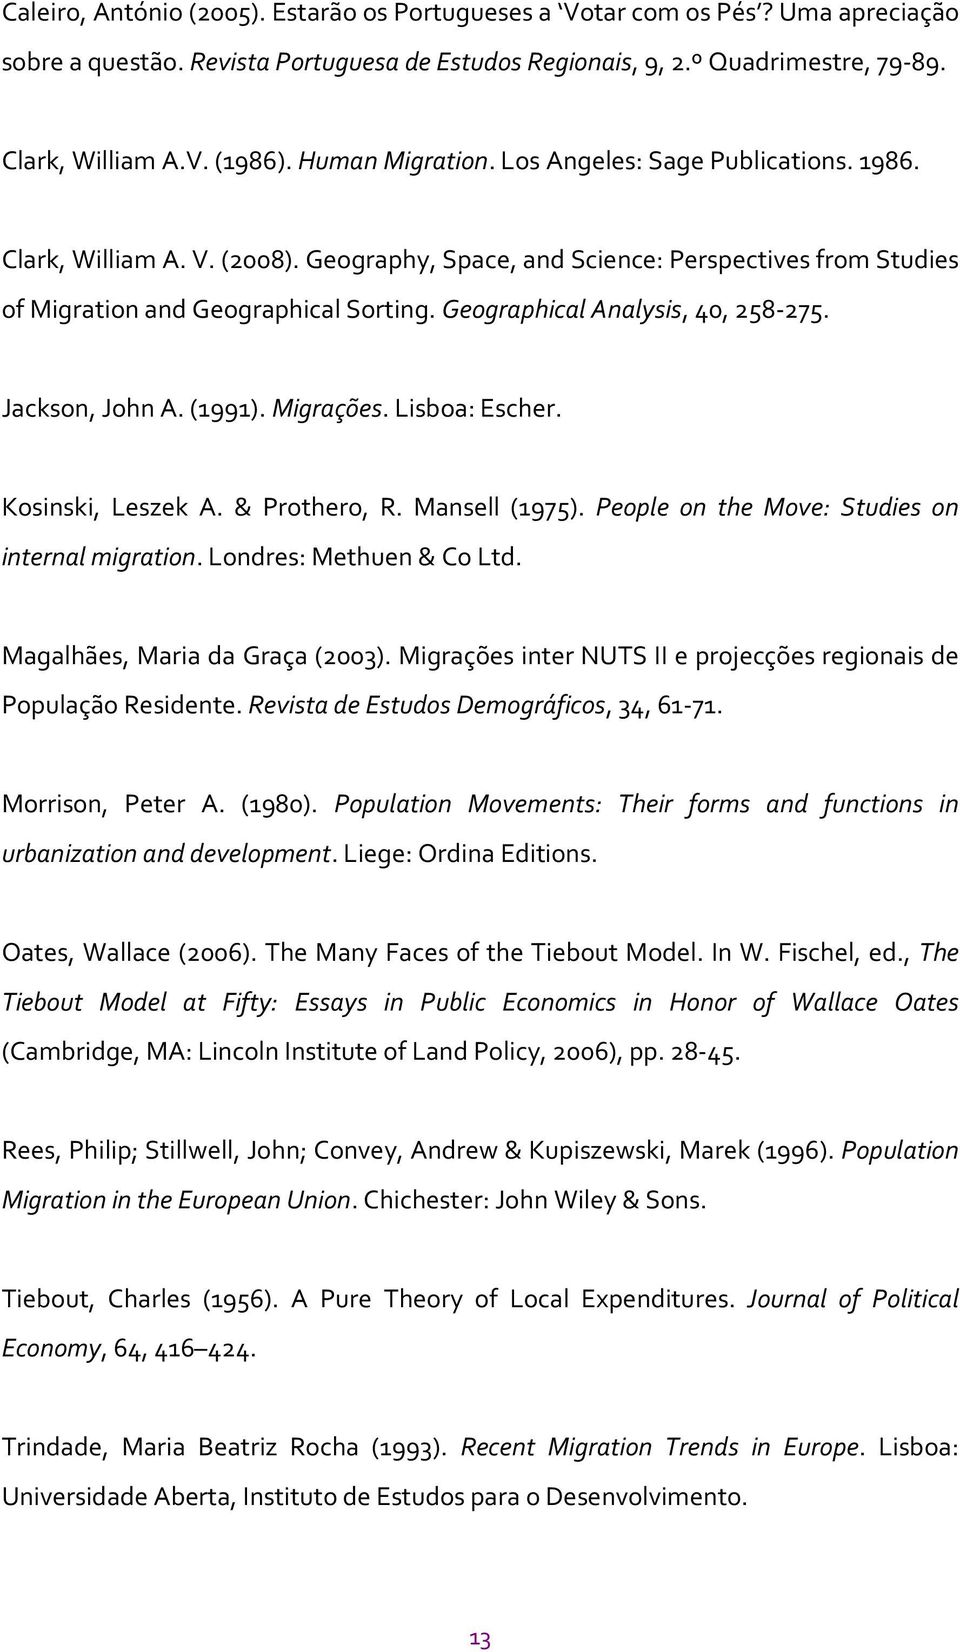 Geographical Analysis, 40, 258-275. Jackson, John A. (1991). Migrações. Lisboa: Escher. Kosinski, Leszek A. & Prothero, R. Mansell (1975). People on the Move: Studies on internal migration.